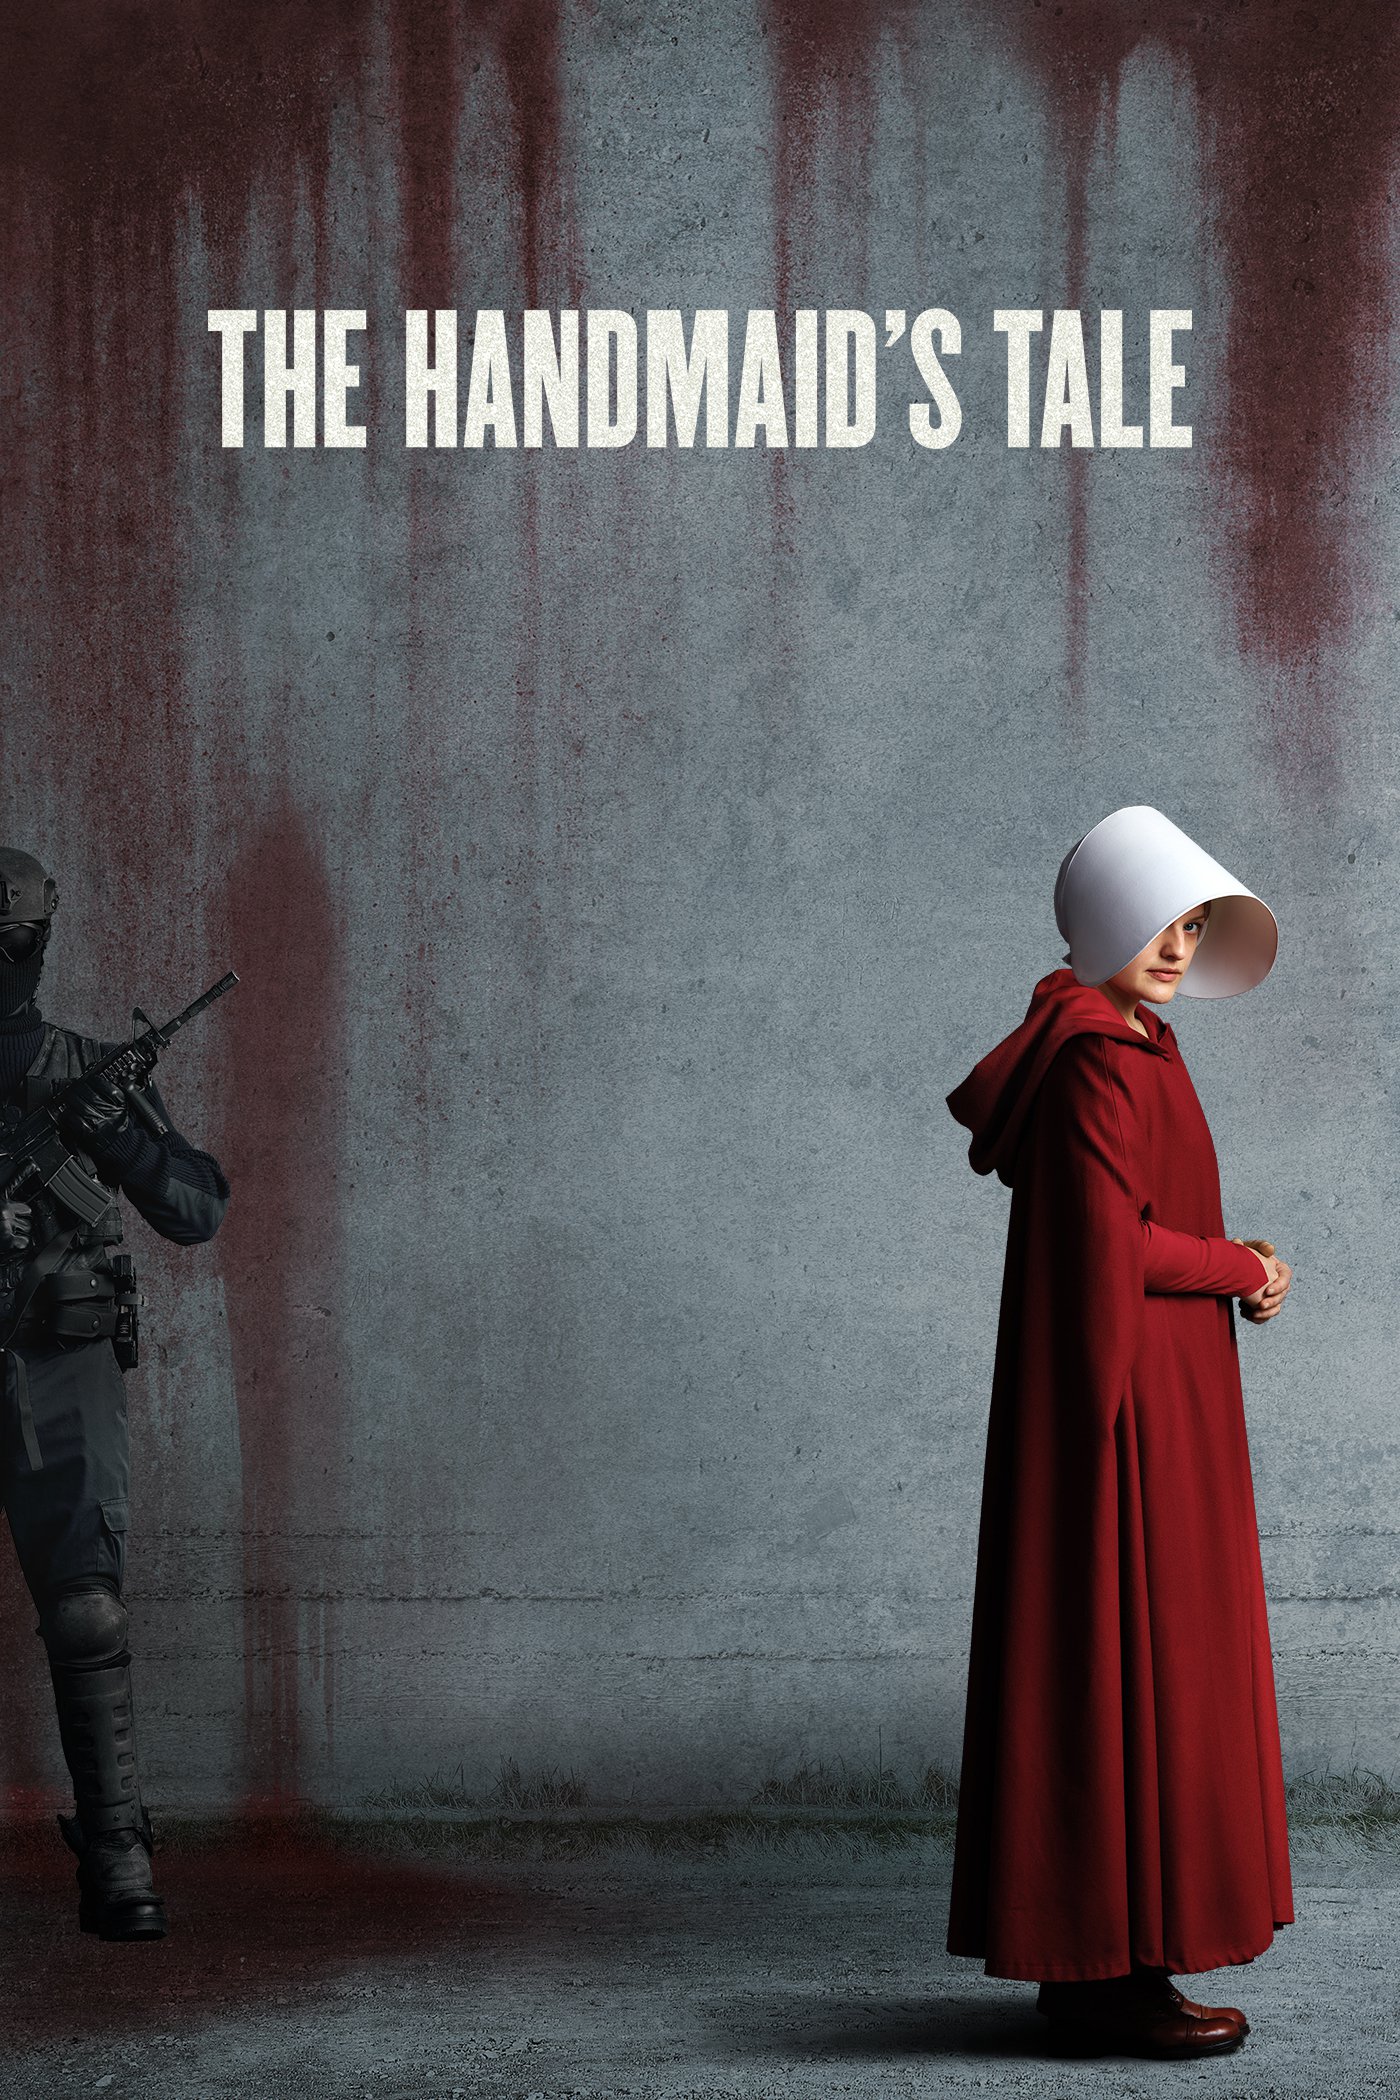 The Handmaid's Tale - La servante écarlate